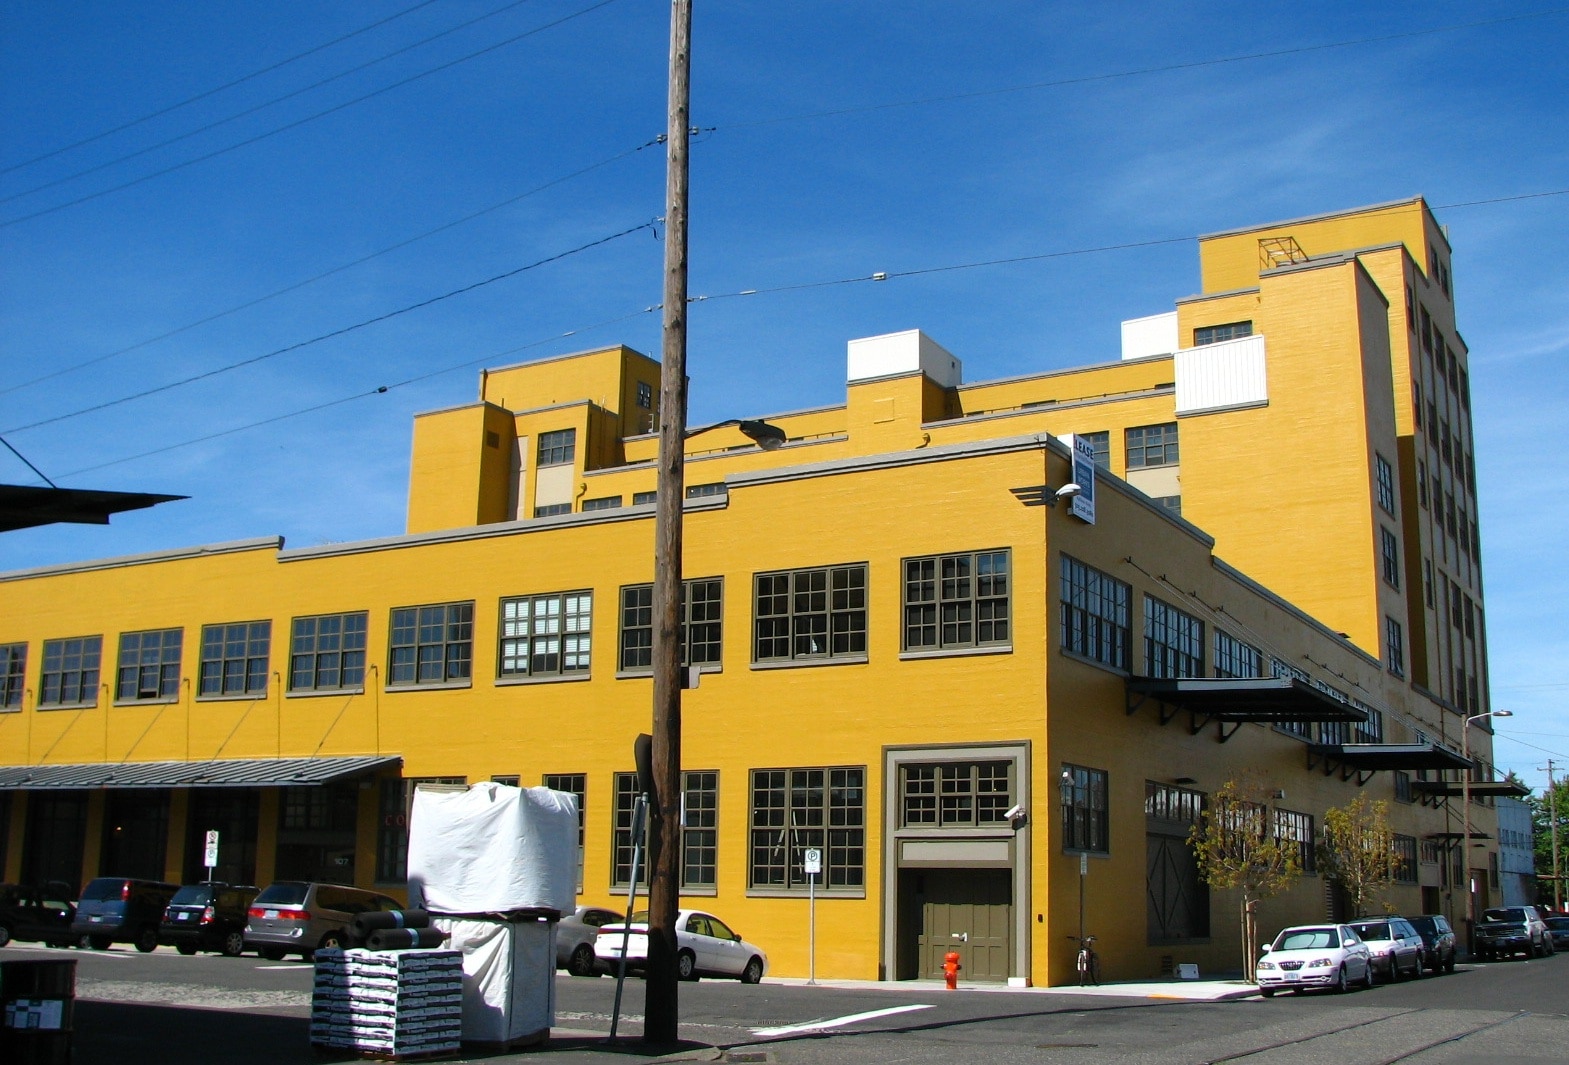 Needmore’s Office Building in Portland Architecture